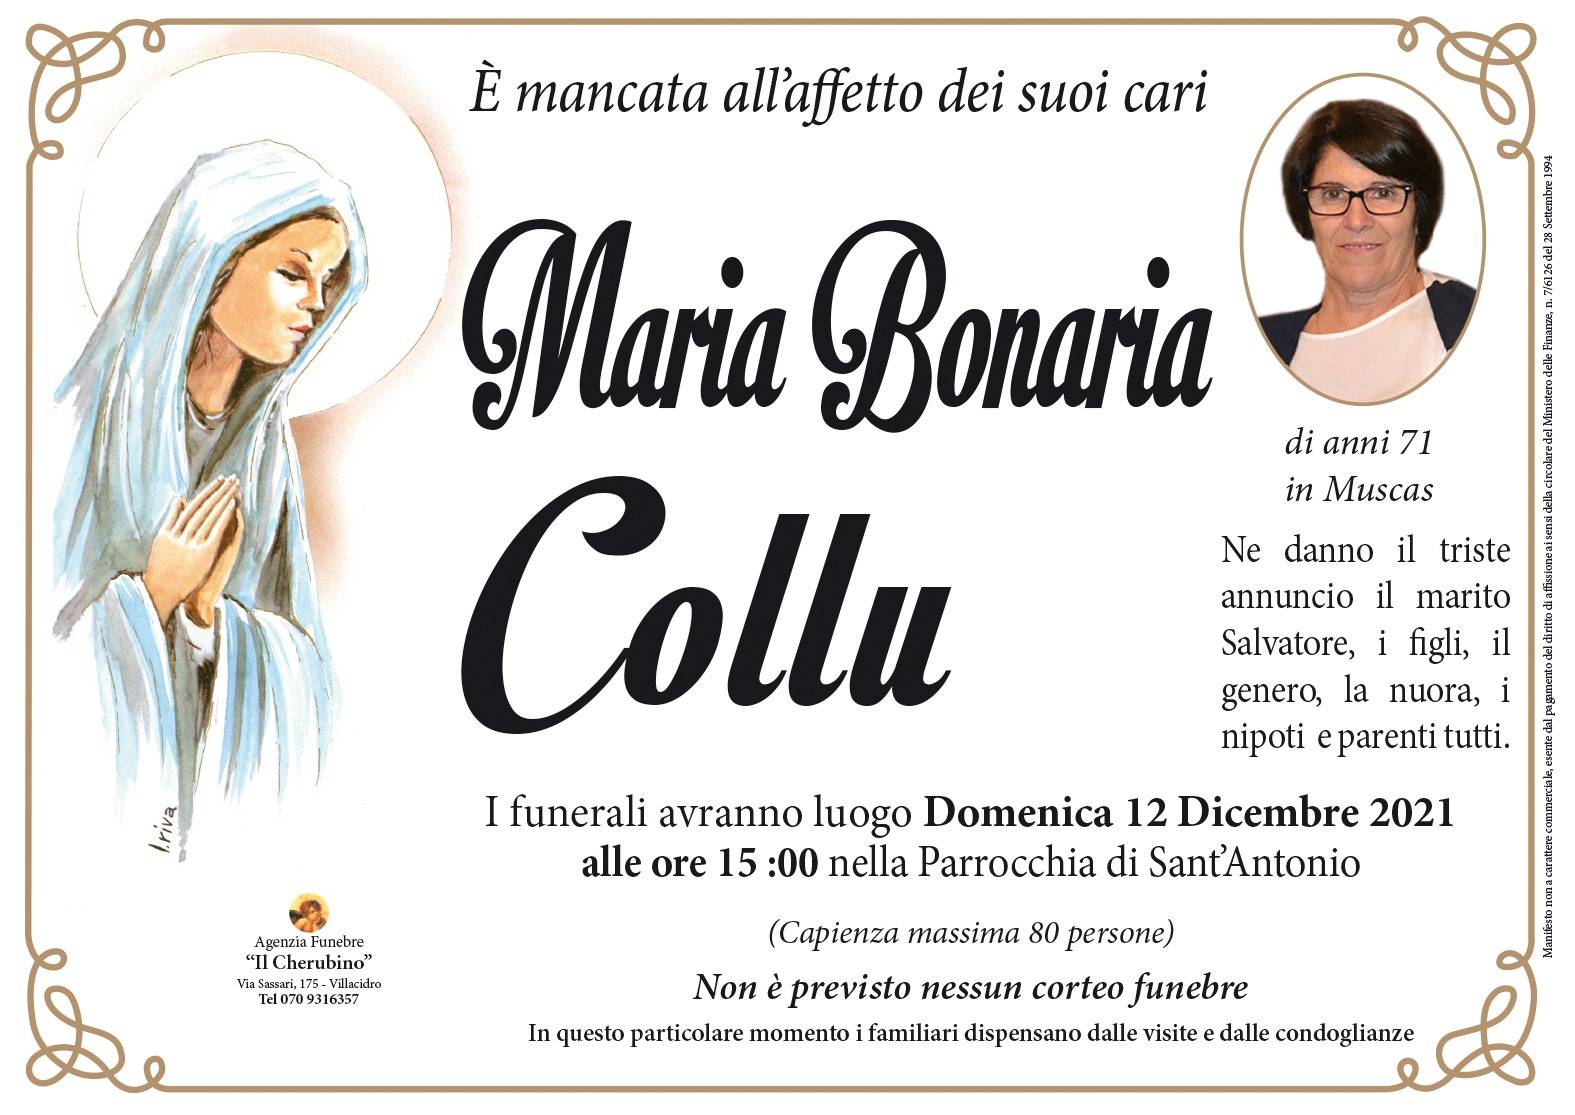 Maria Bonaria Collu